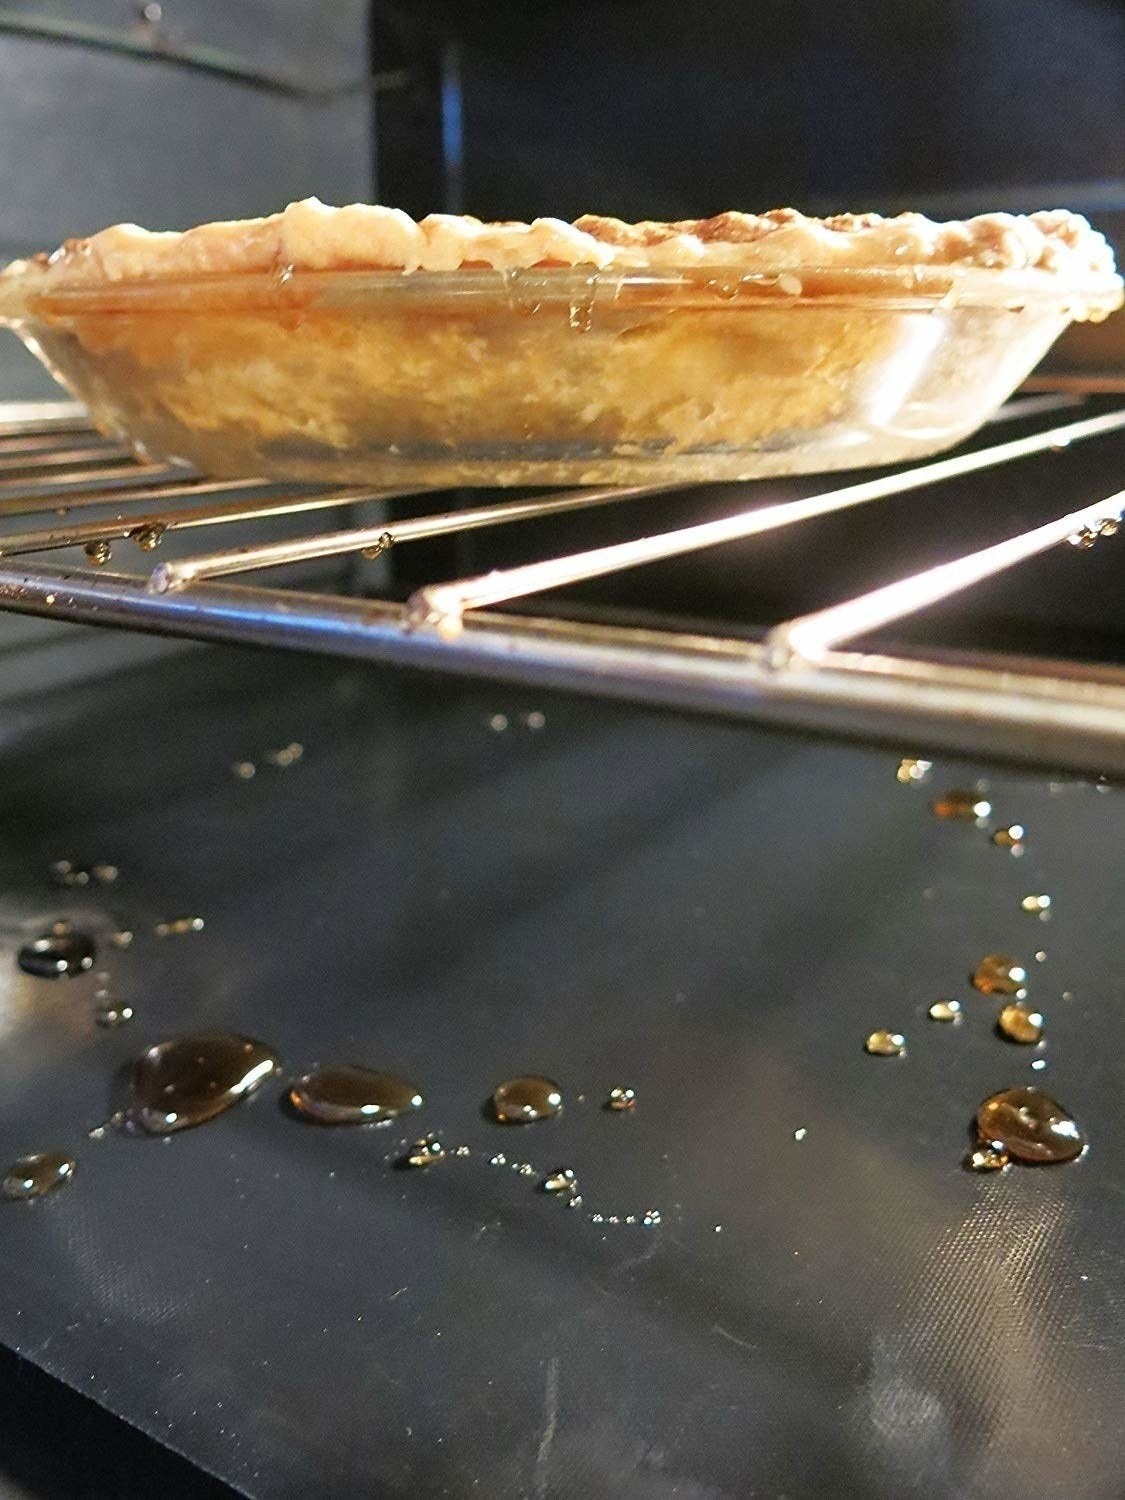 an apple pie inside the oven that has dripped liquid onto a mat below it